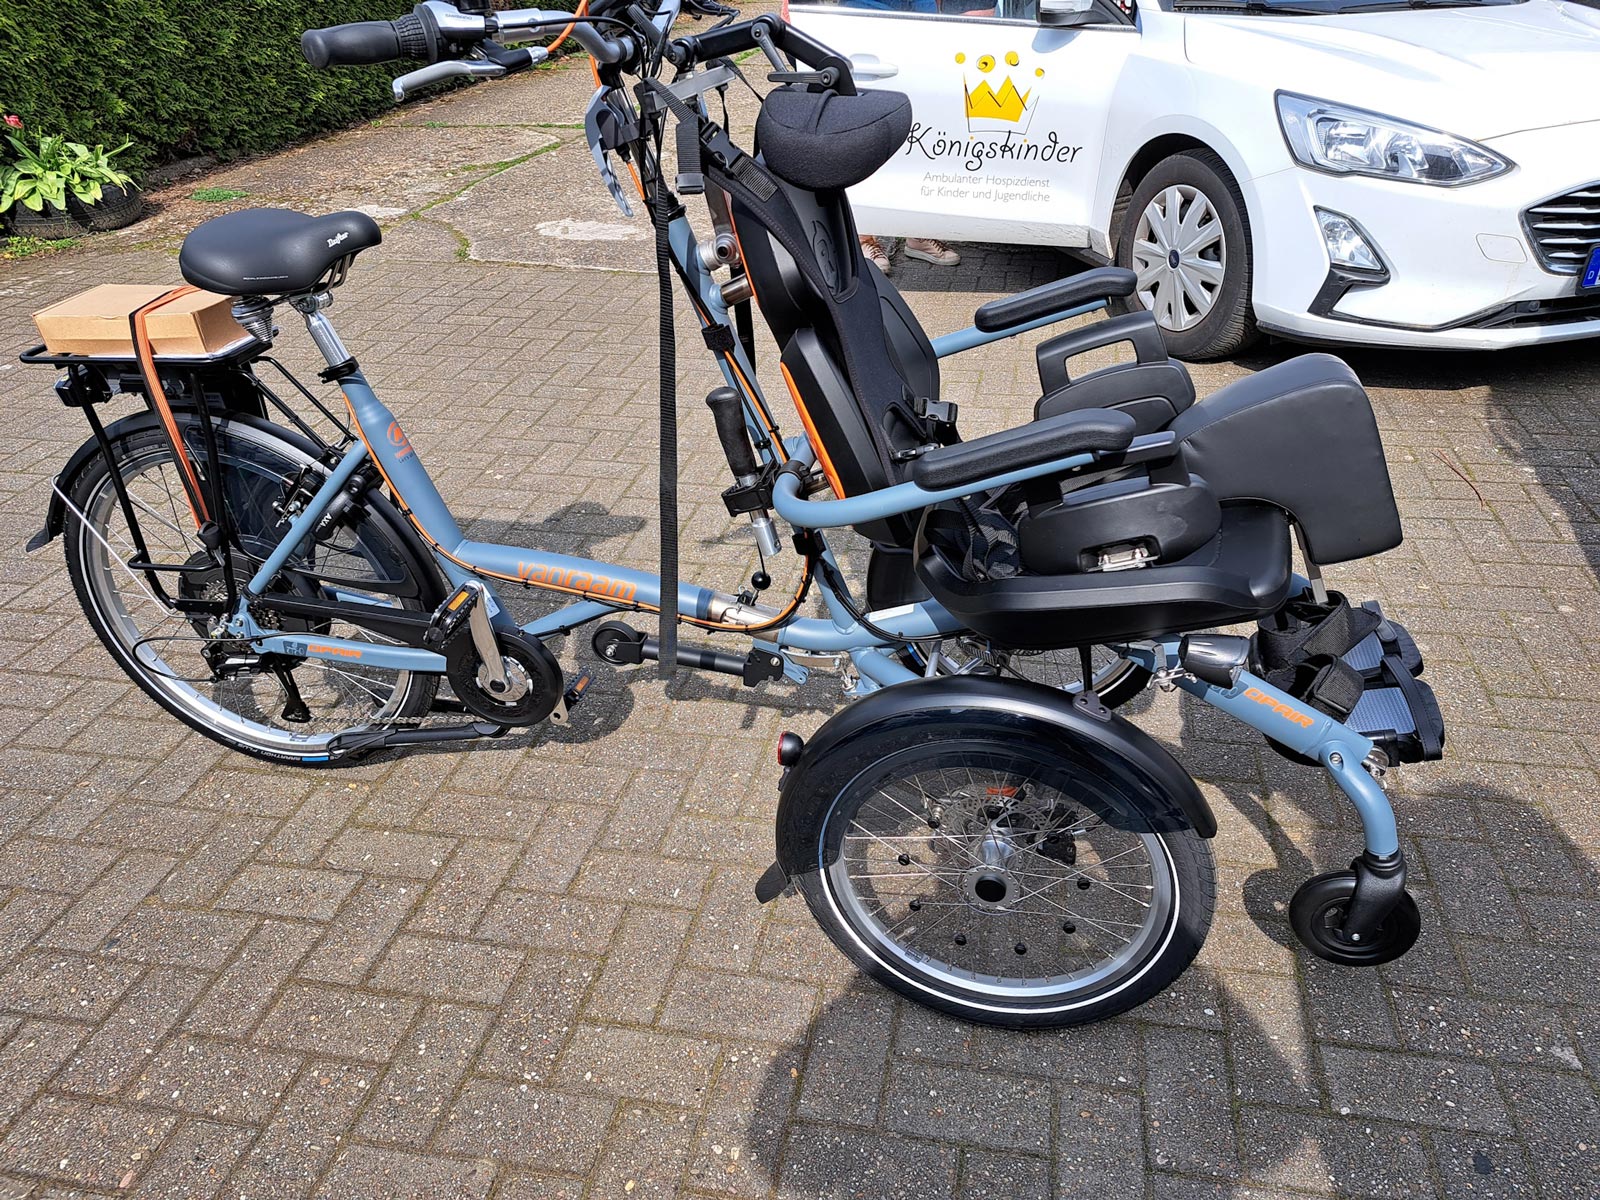 Enniger HILFT Kindern - Übergabe Rollstuhlfarrad vor Ort in Ostbevern.